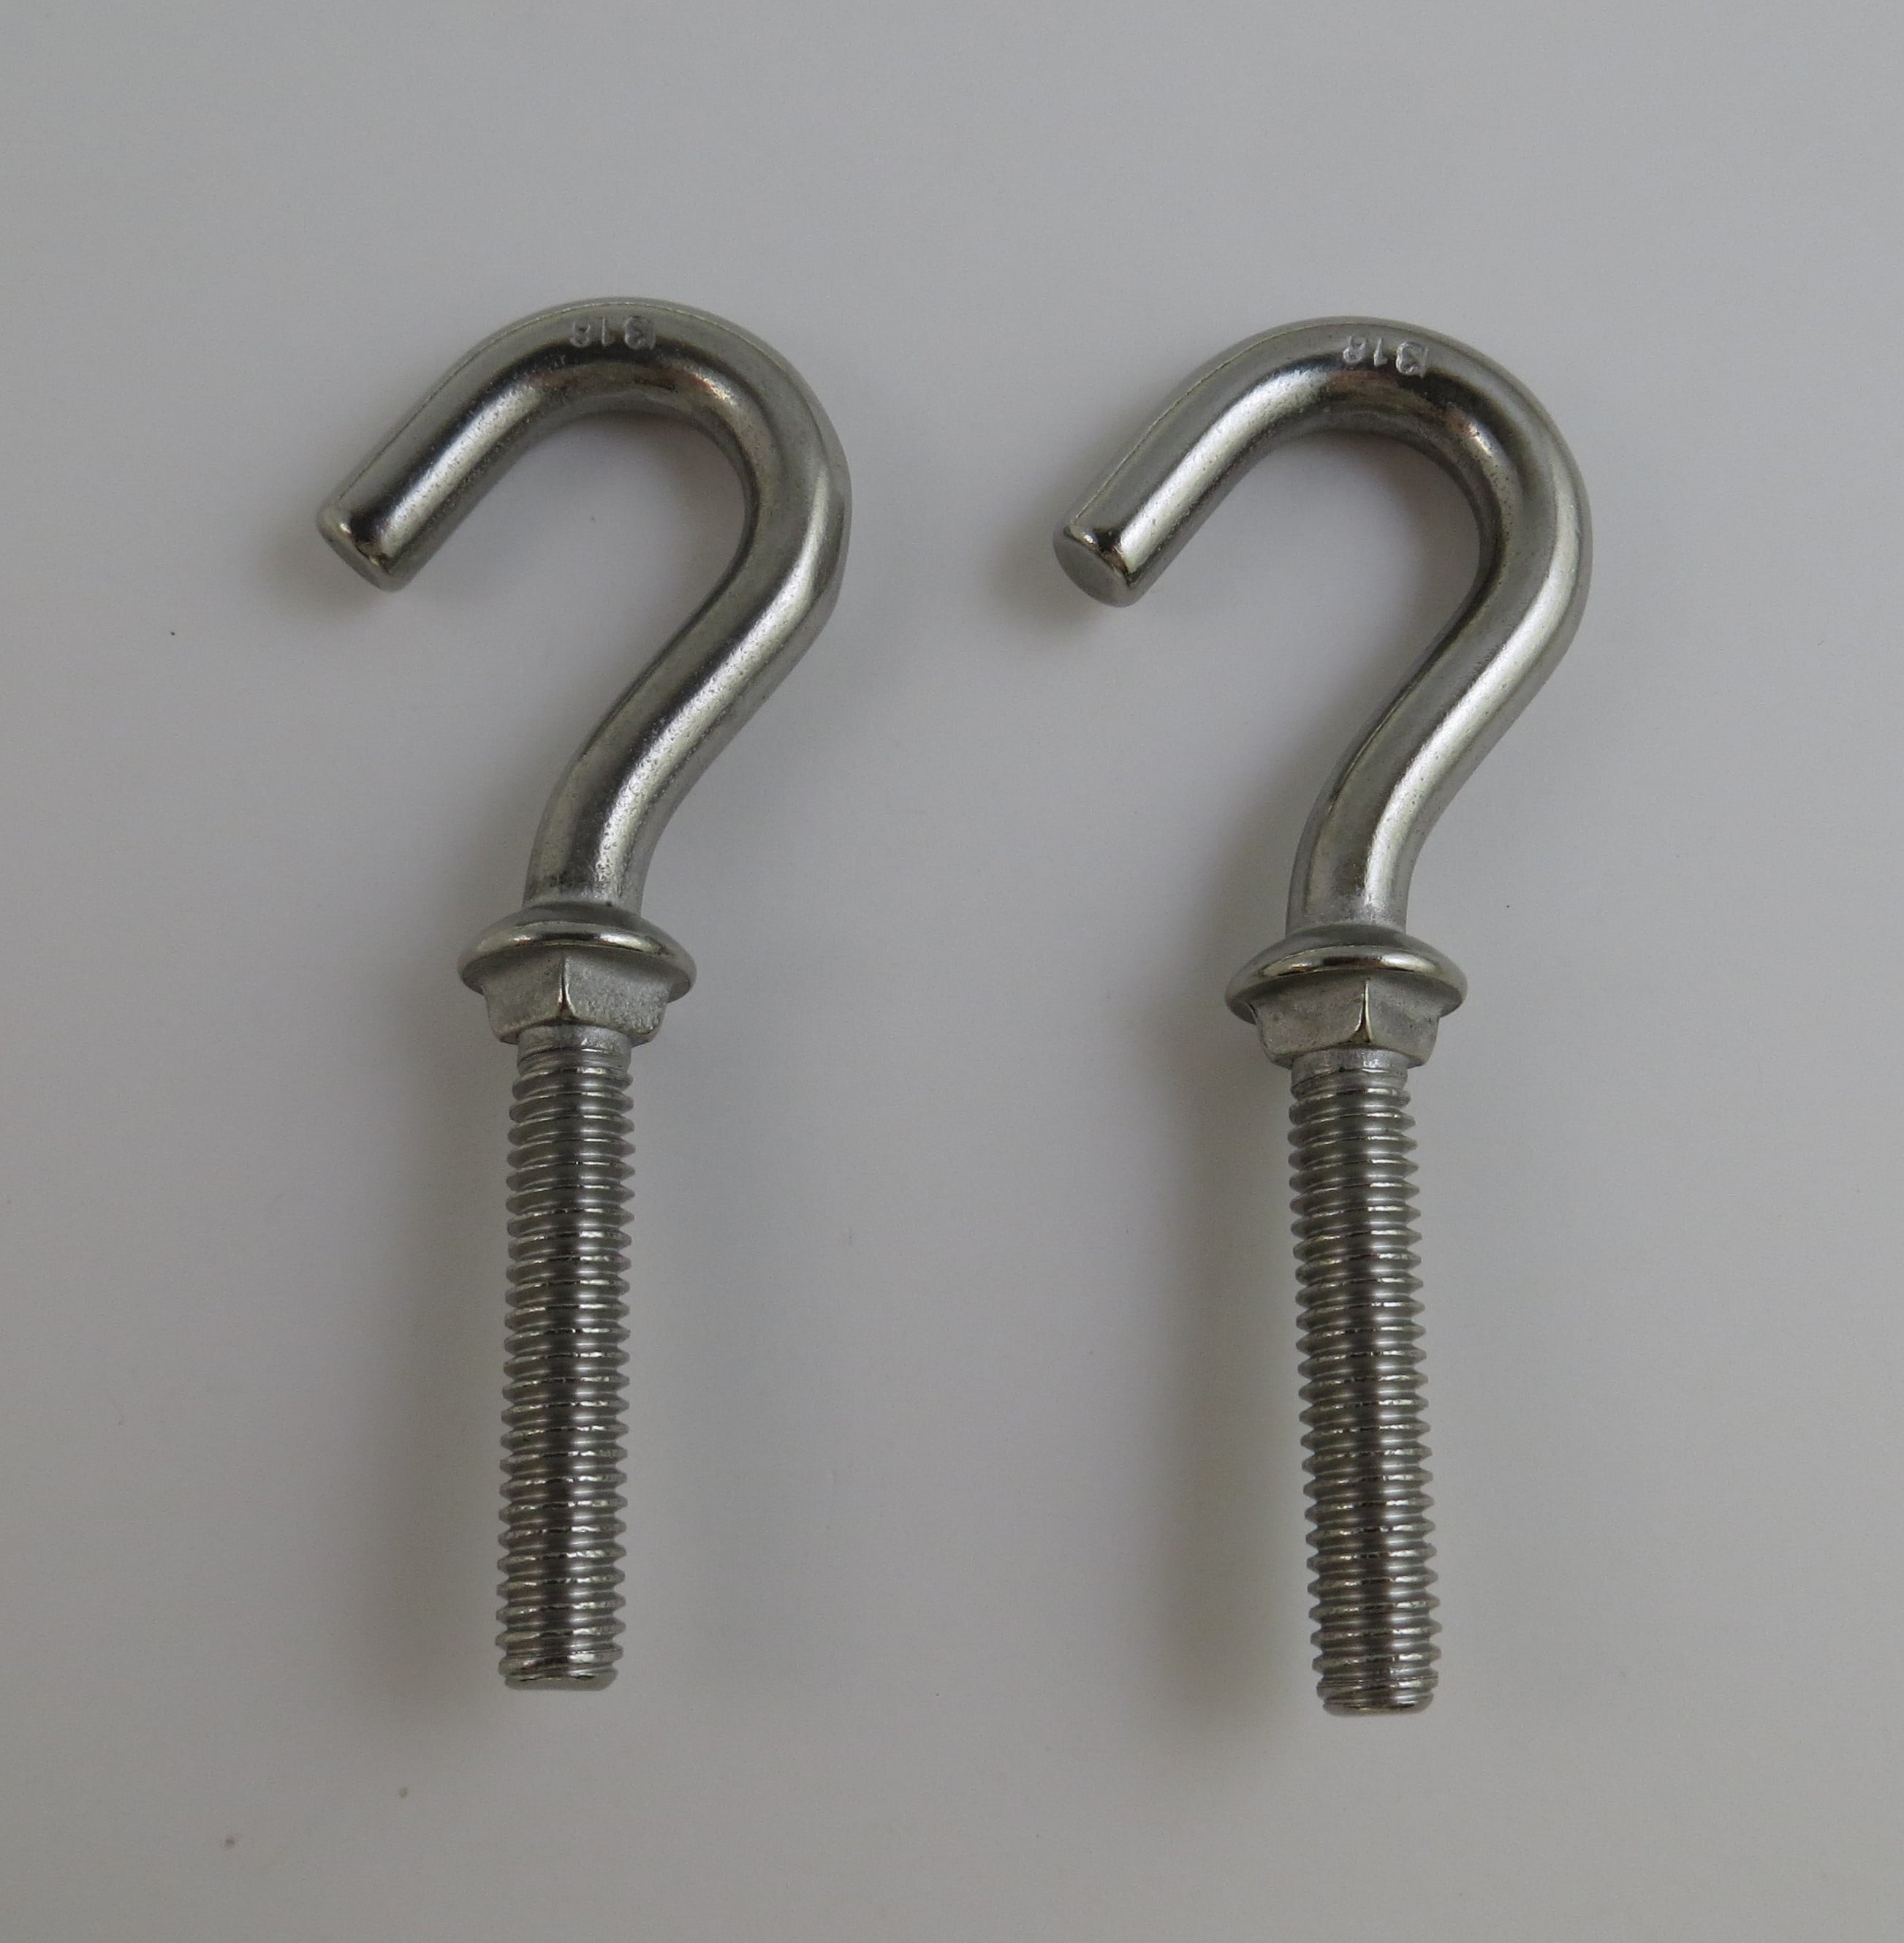 2 Pieces Stainless Steel 316 Hook Bolt 5/16 (8mm) Marine Grade 